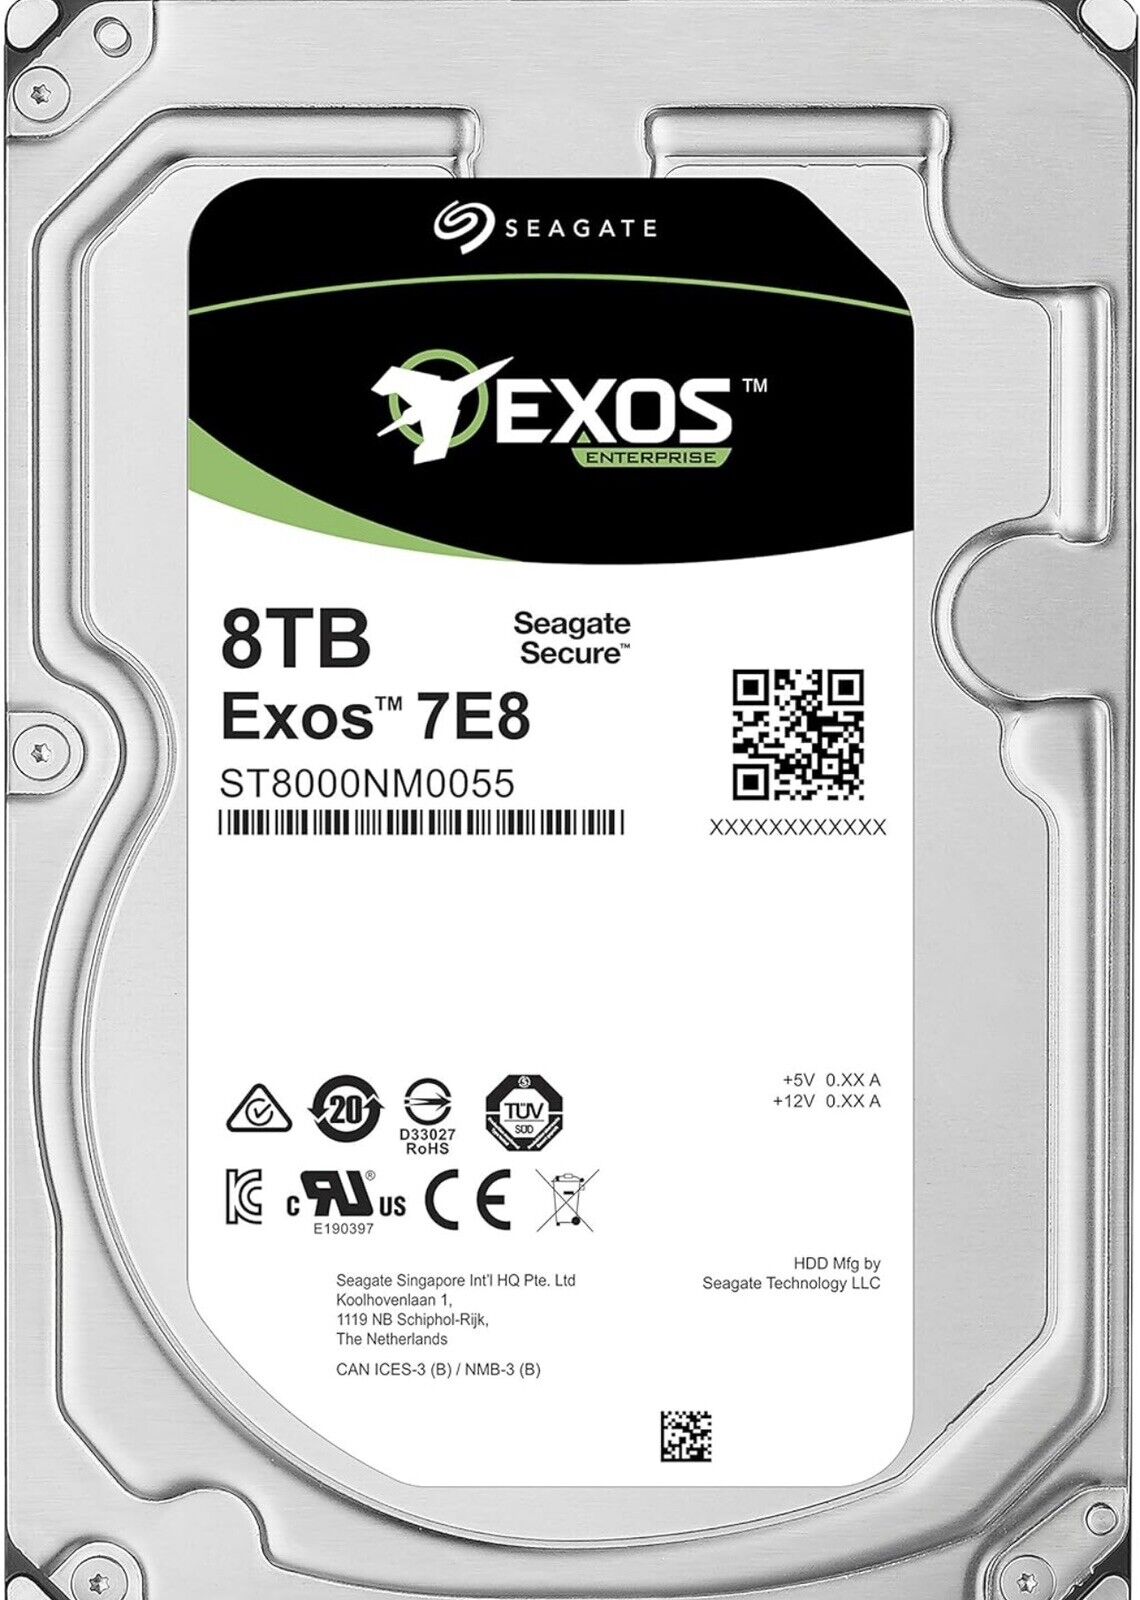 Seagate Exos 7e8 8TB, Internal, 7200 RPM, 3.5 inch (ST8000NM000A) Hard Drive